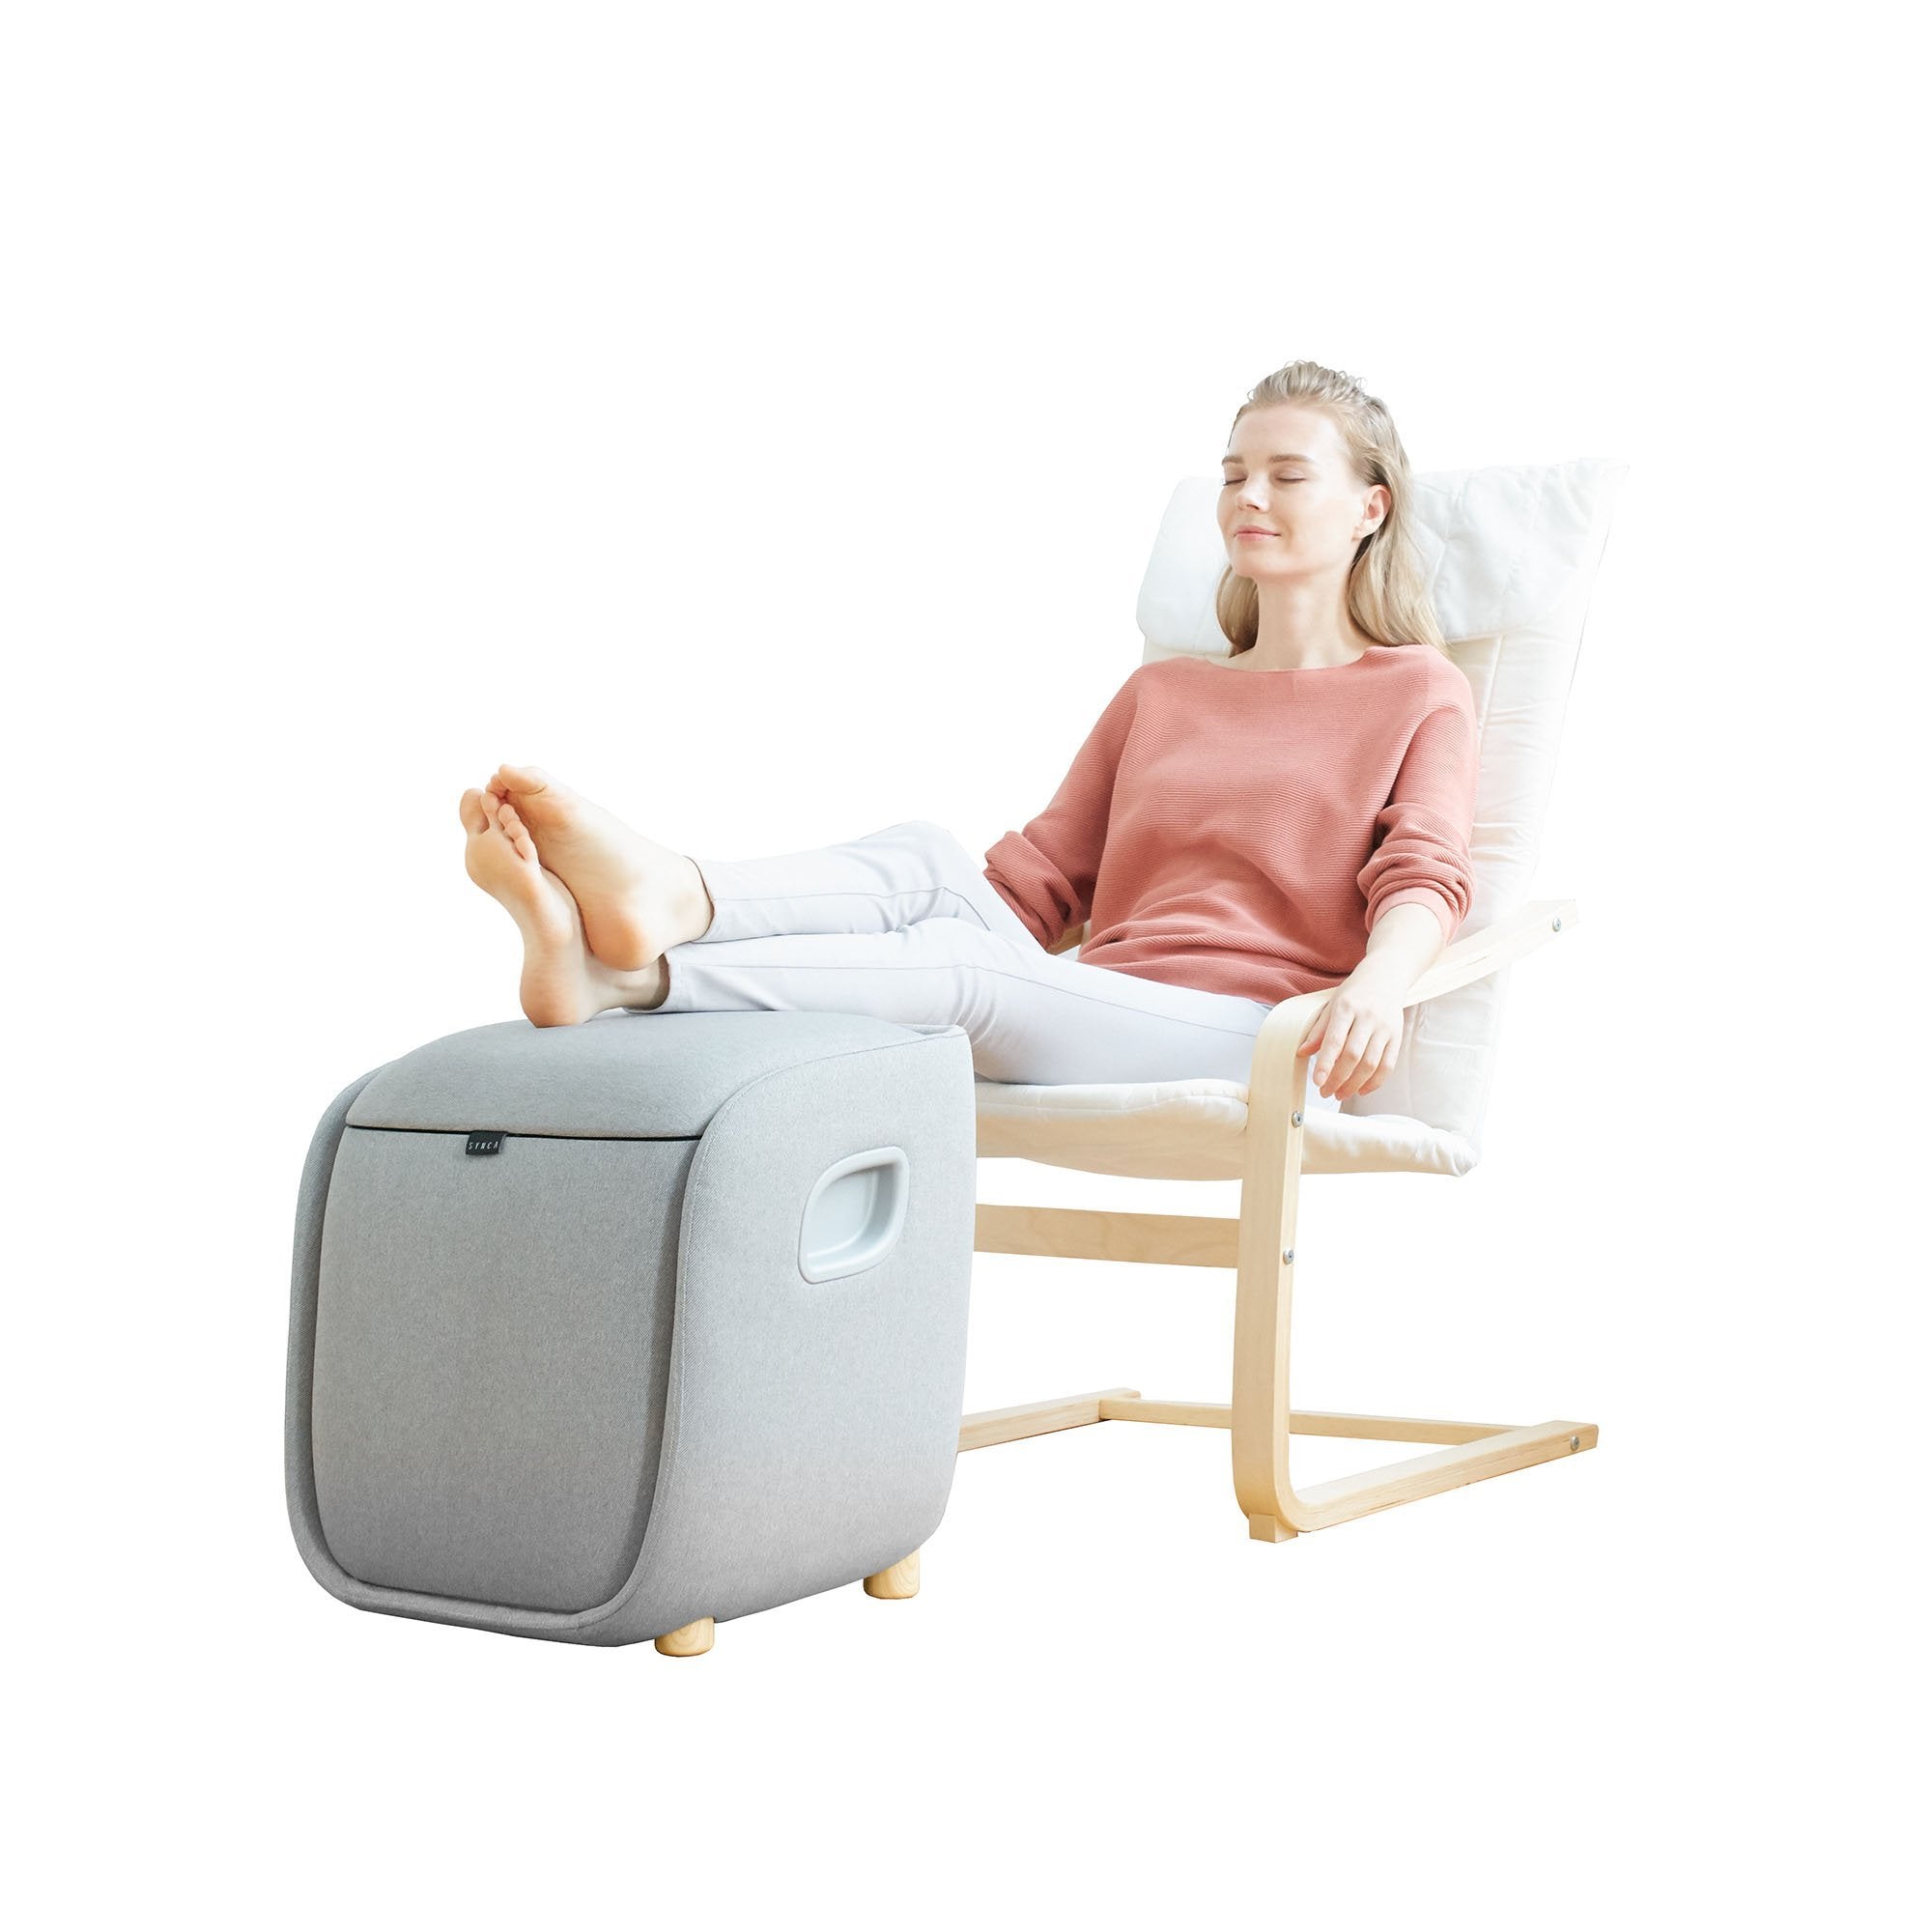 iPuffy - Premium 3D Heated Lumbar Massager